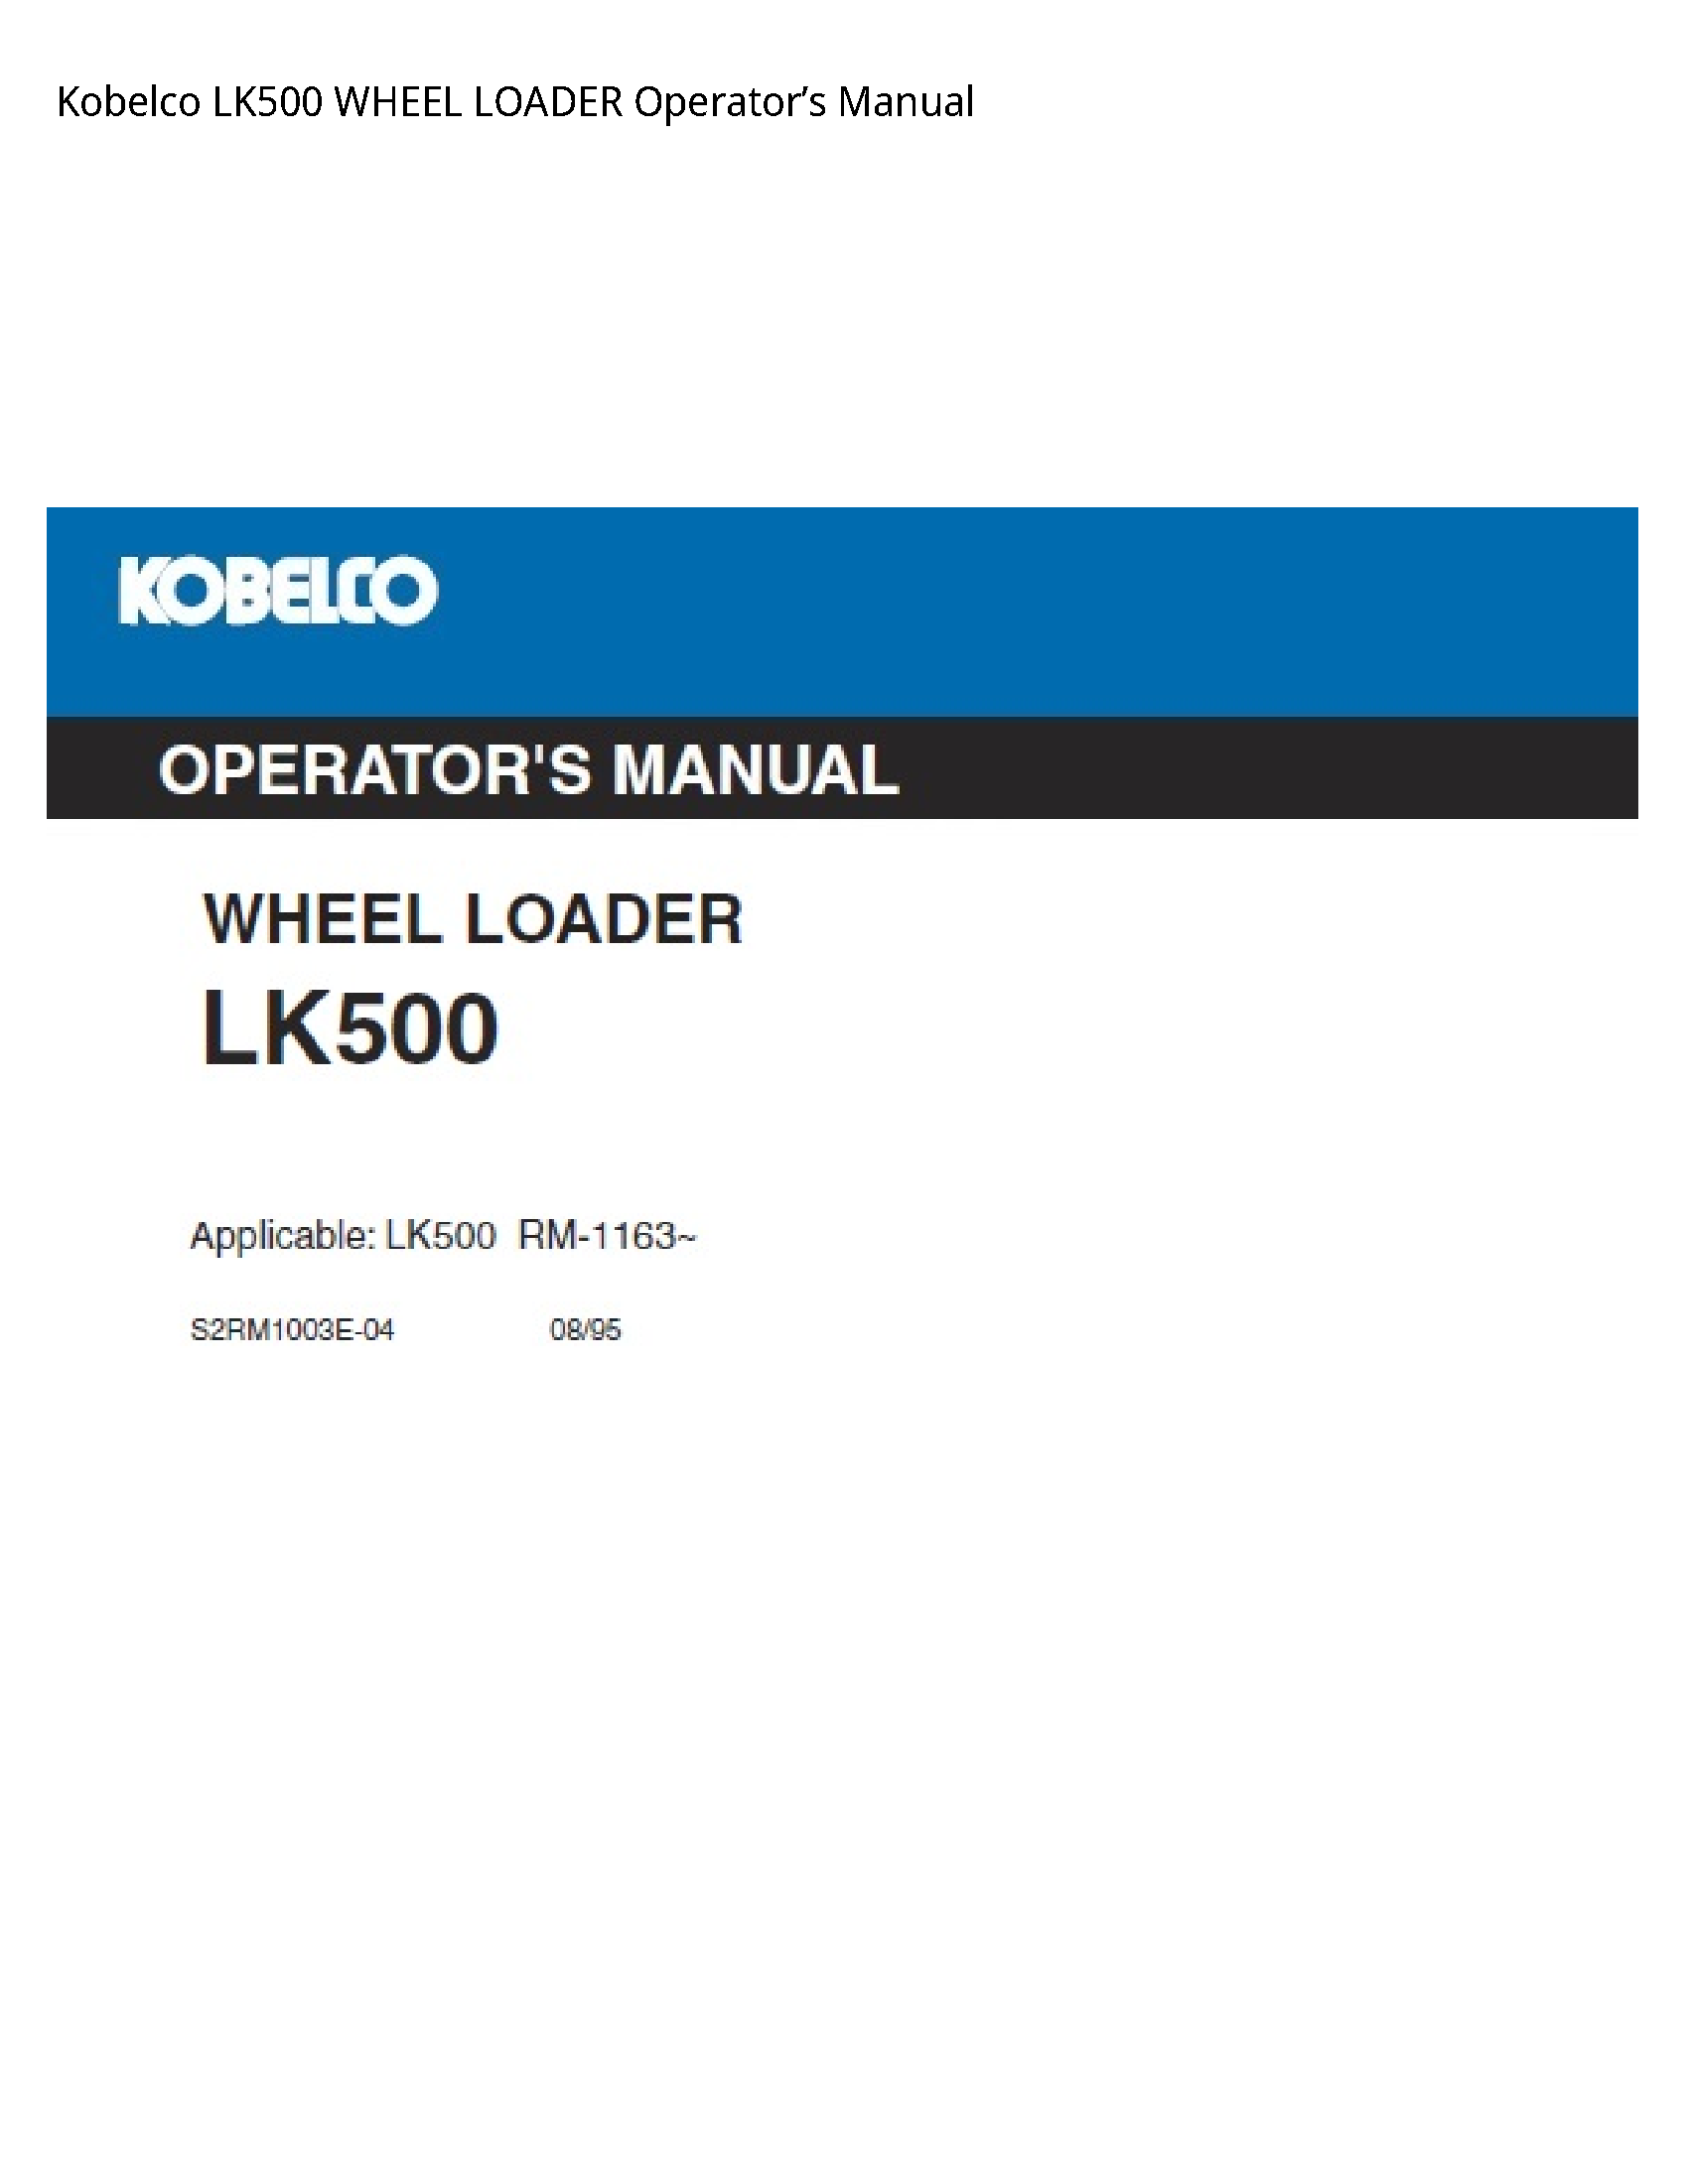 Kobelco LK500 WHEEL LOADER Operator’s manual